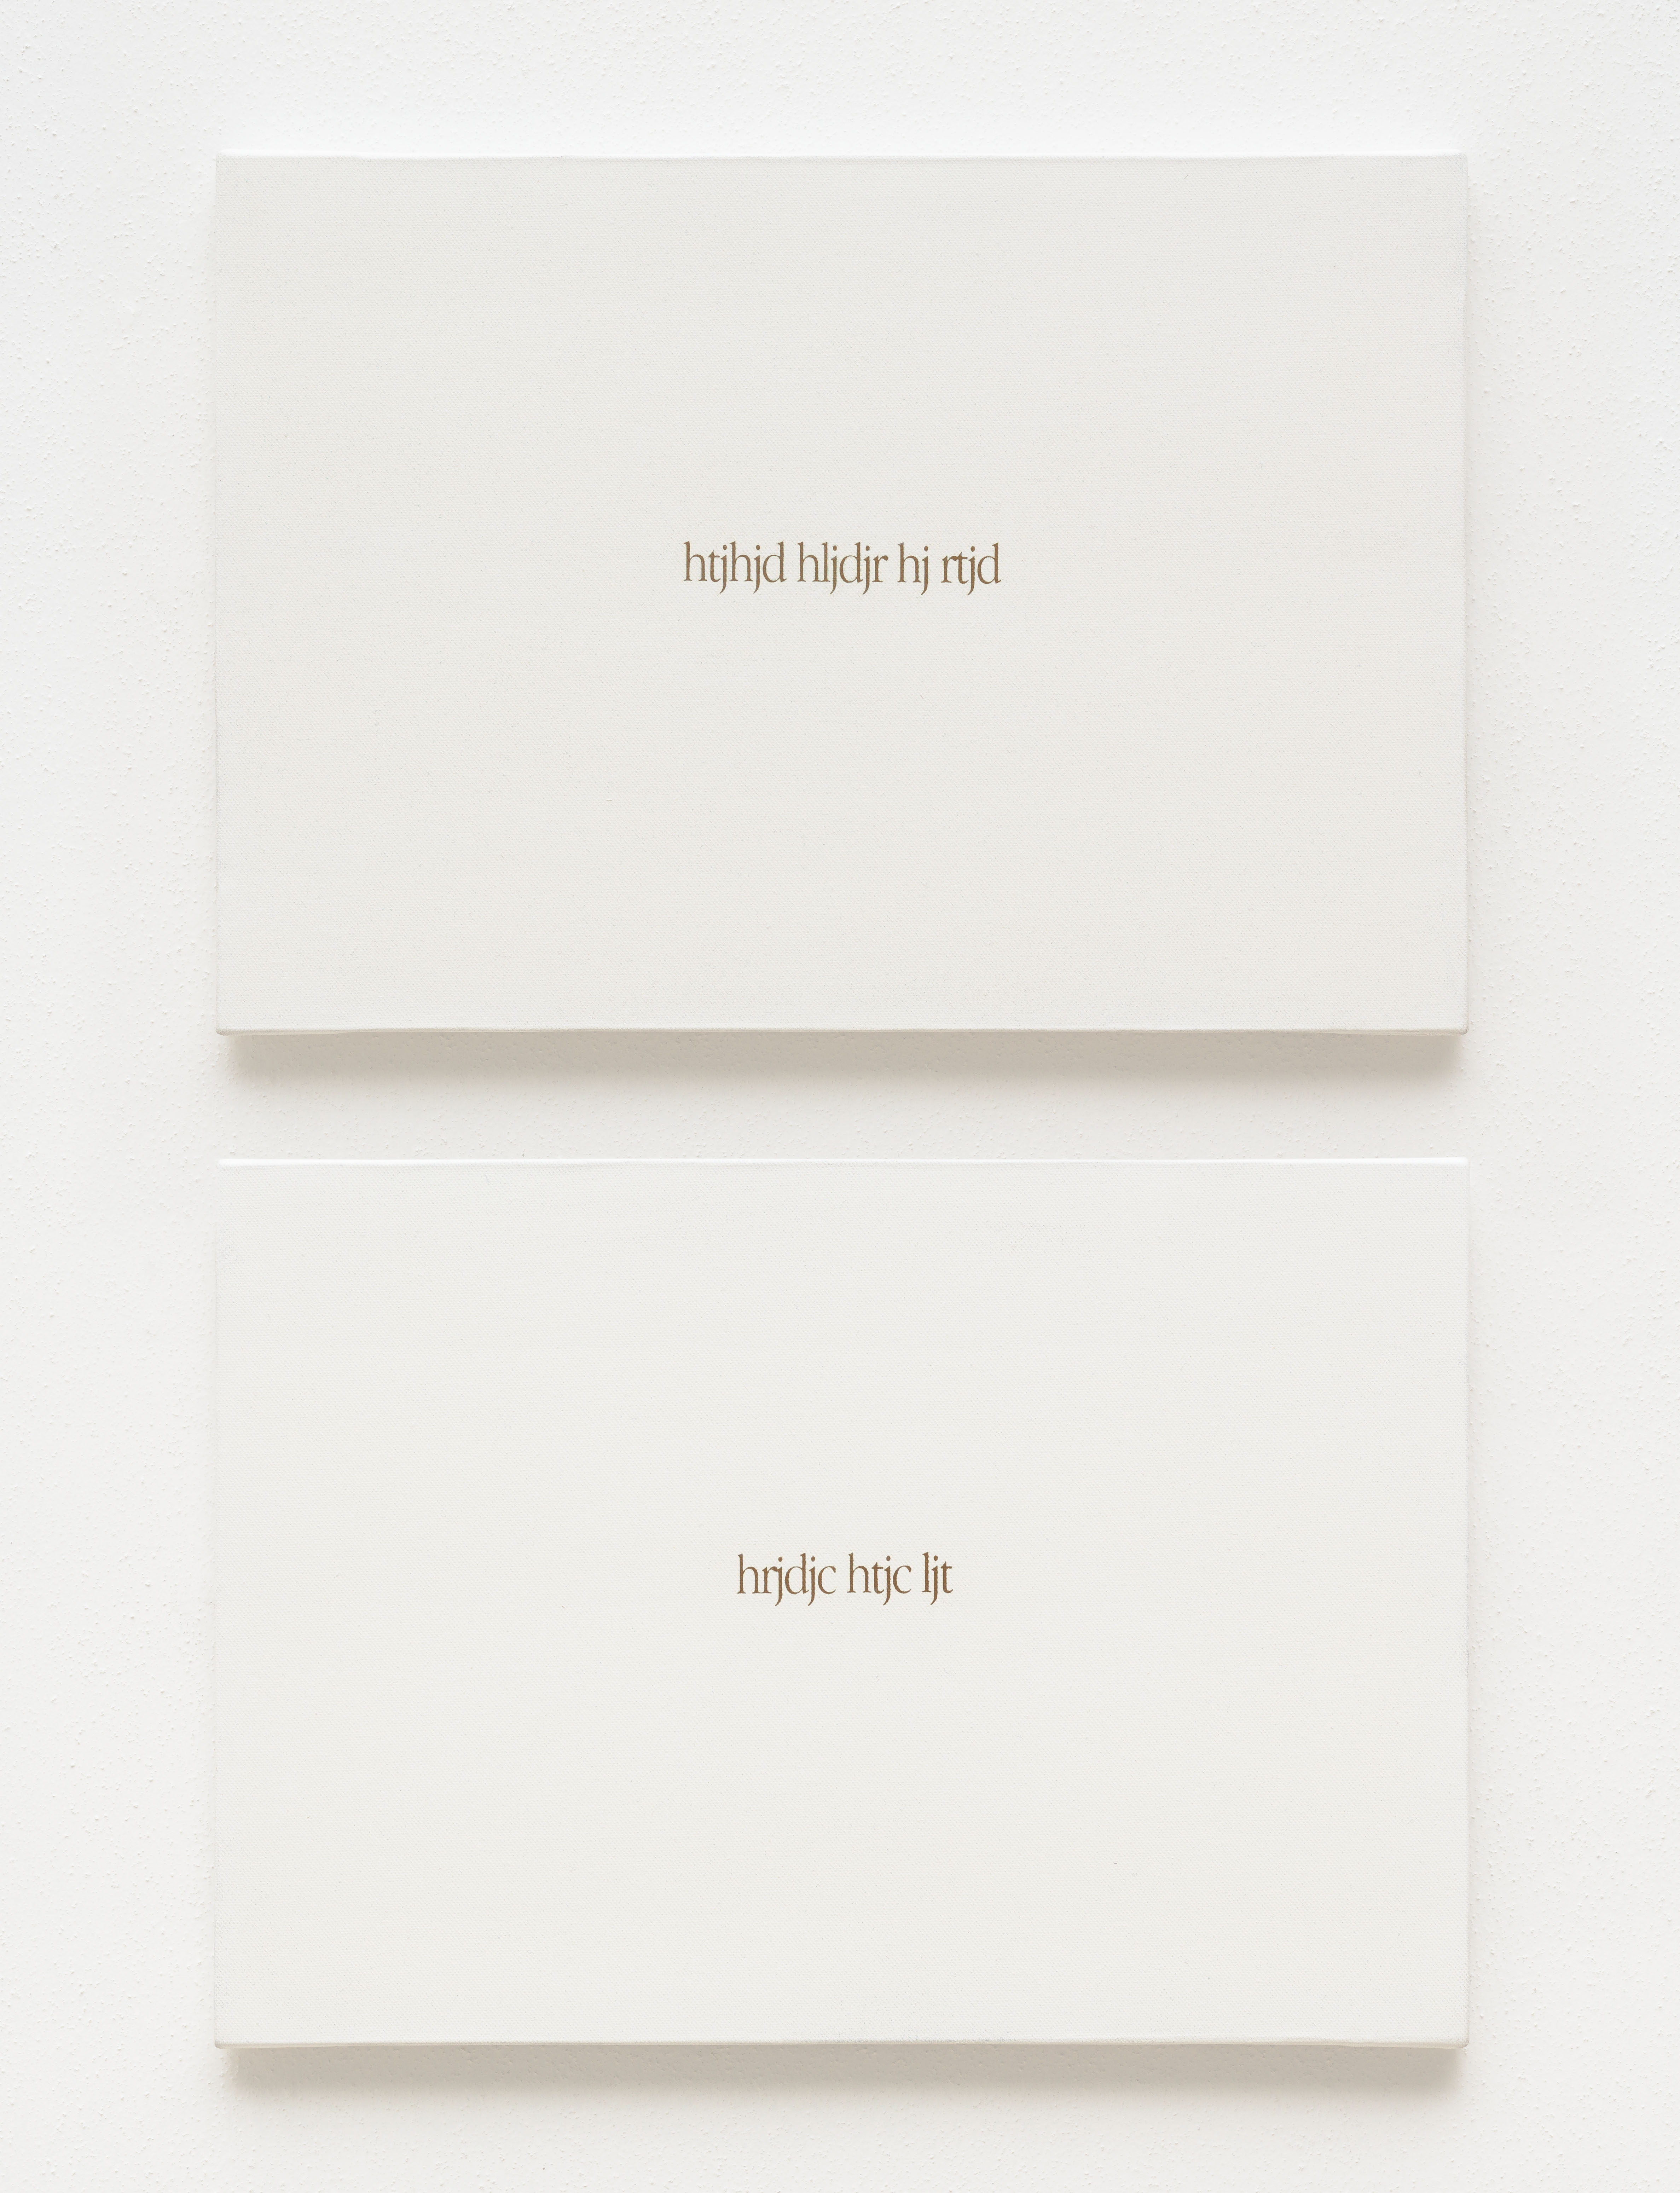 Irma Blank, Global Writings, La lingua ritrovata, poesia minima, 19-2-04, digital writing and silkscreen print on canvas, diptych, 30.5 x 43.5 cm each, 2004